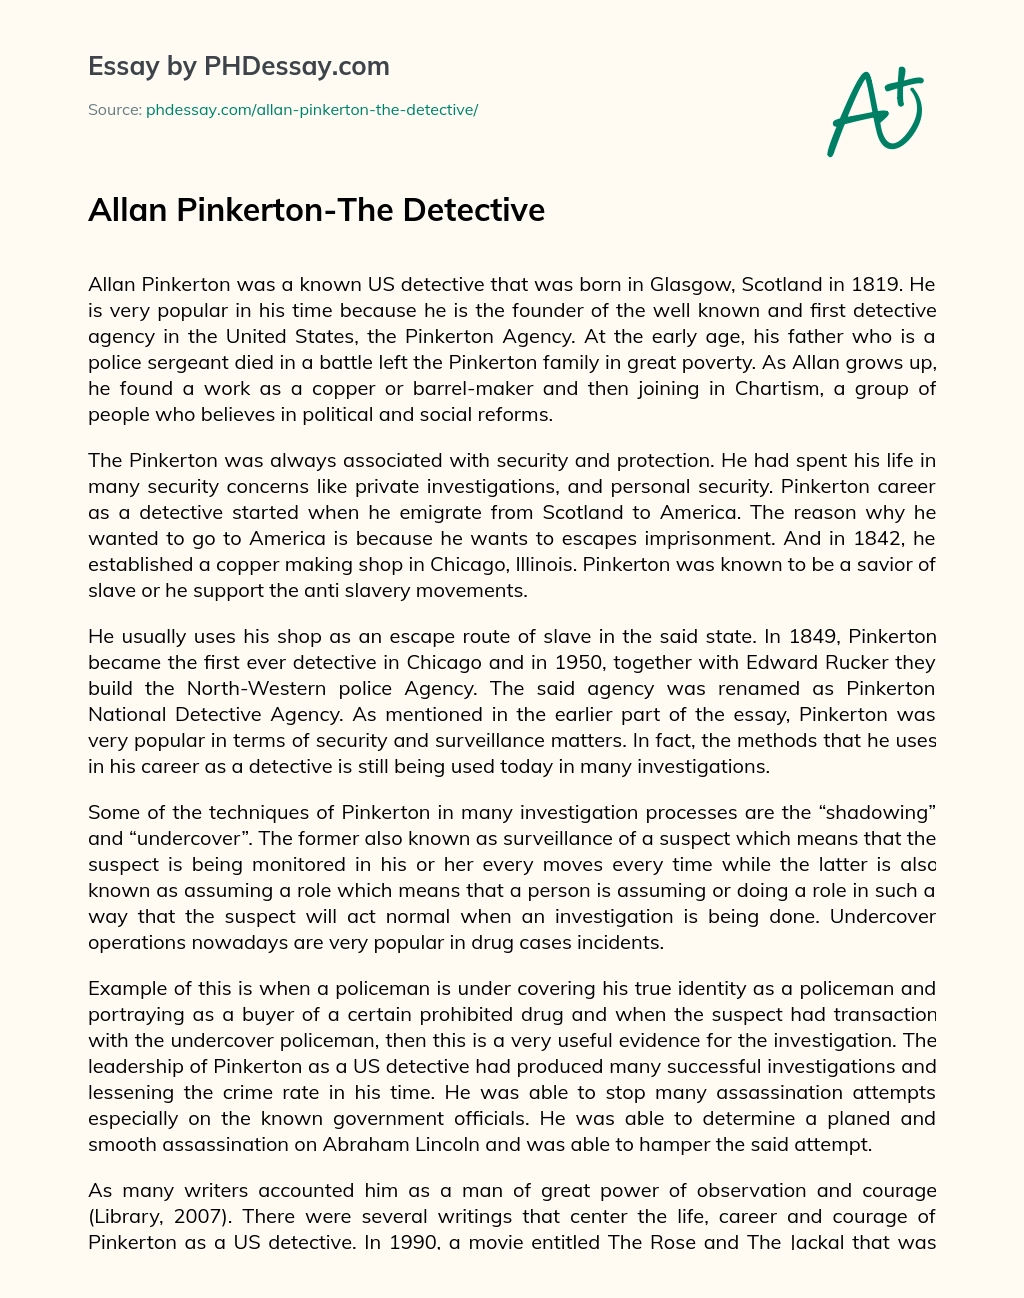 Allan Pinkerton-The Detective essay